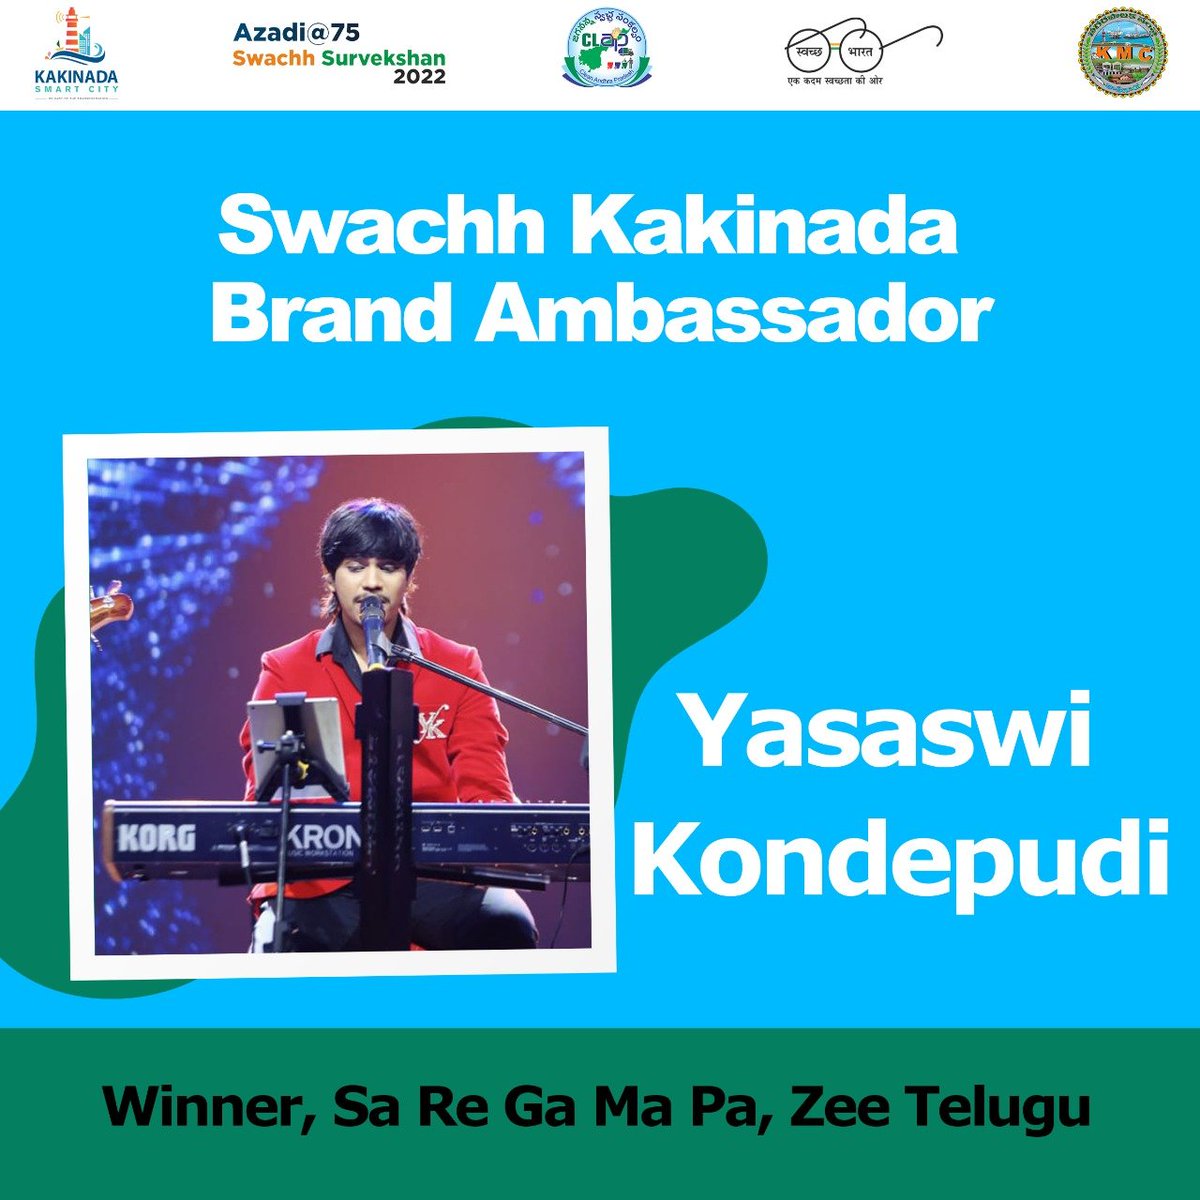 Mr. Yasaswi Kondepudi has been identified as brand ambassador for Swachh Kakinada, he will come among you and bring awareness about cleanliness. #ULDCODE802955 @SwachhBharatGov @SwachhaAndhra @SwachSurvekshan